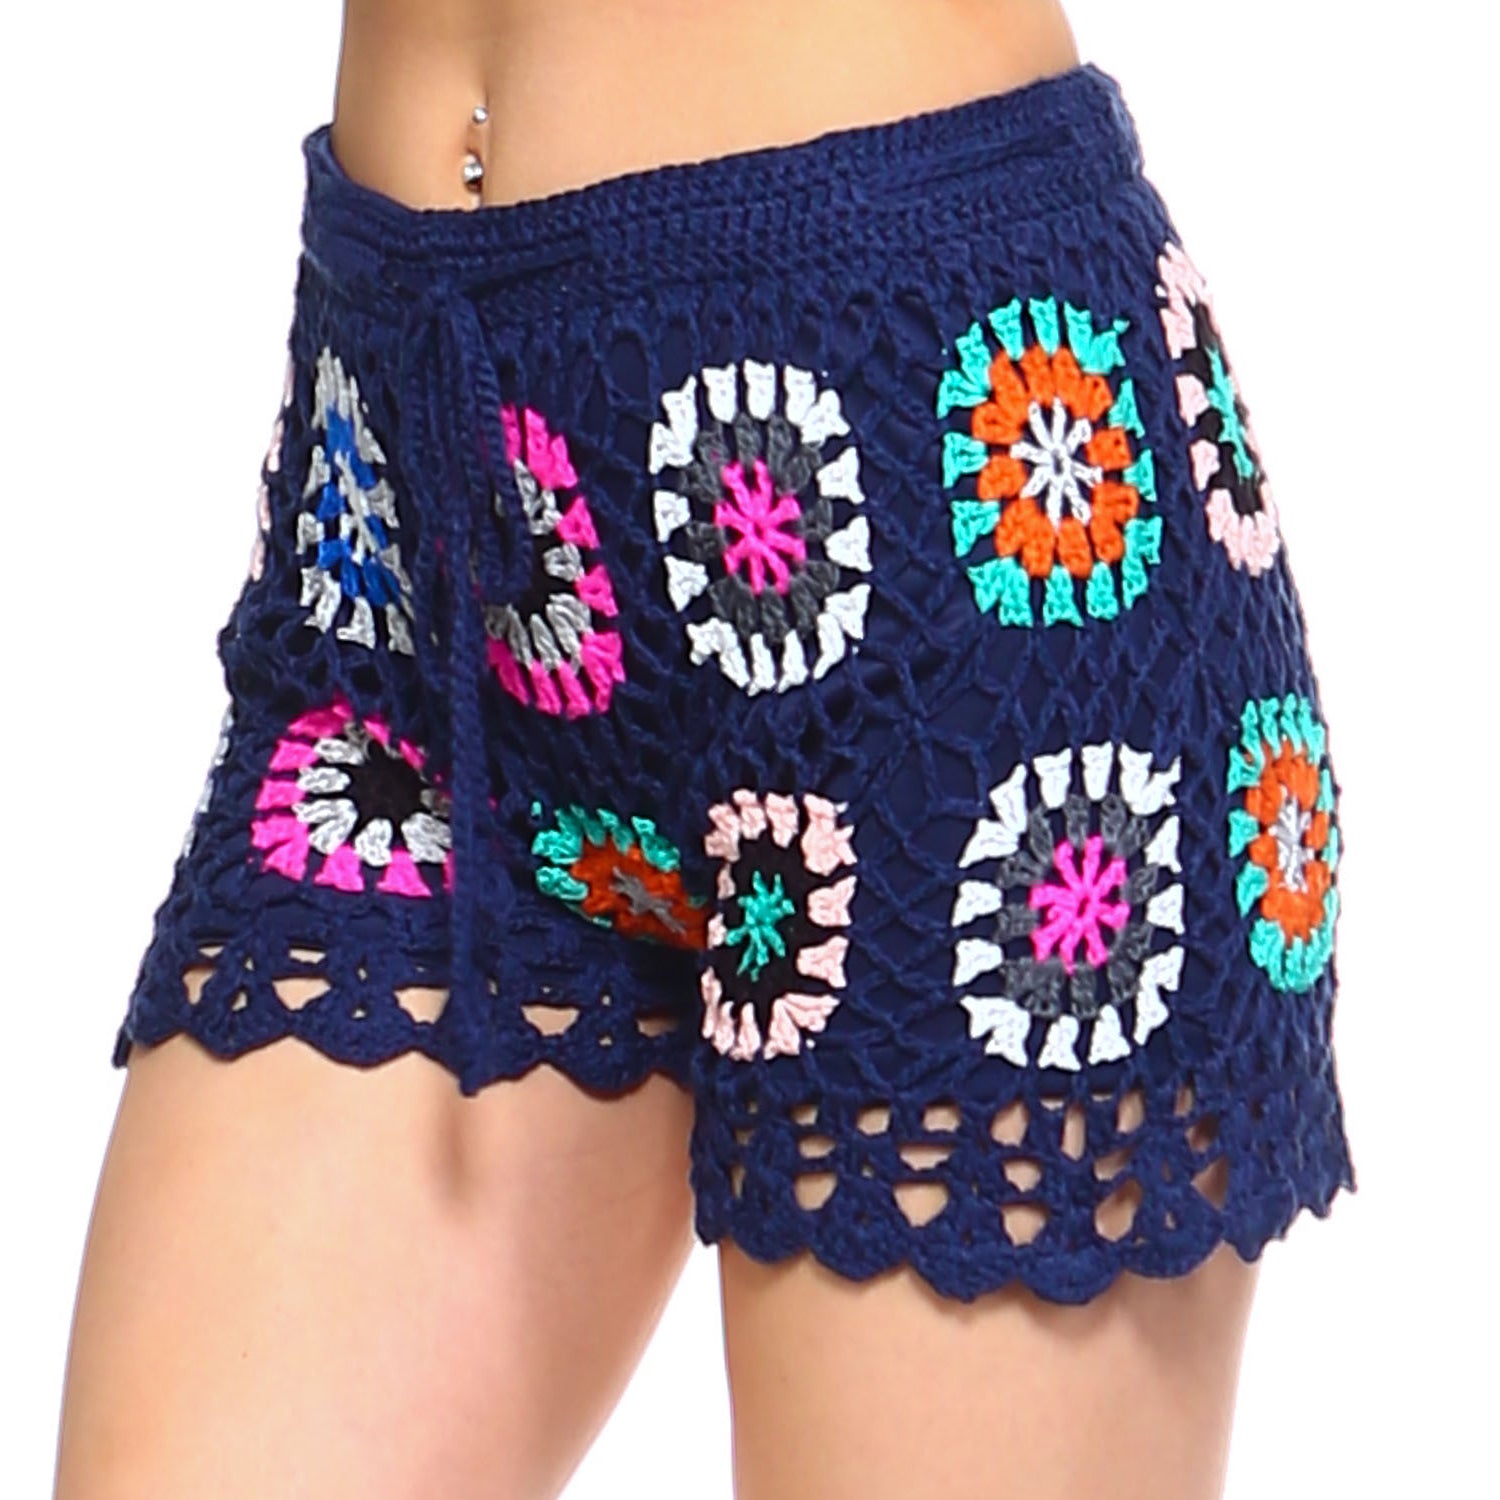 Fashionazzle Women's Casual Summer Beach Crochet Handmade Shorts